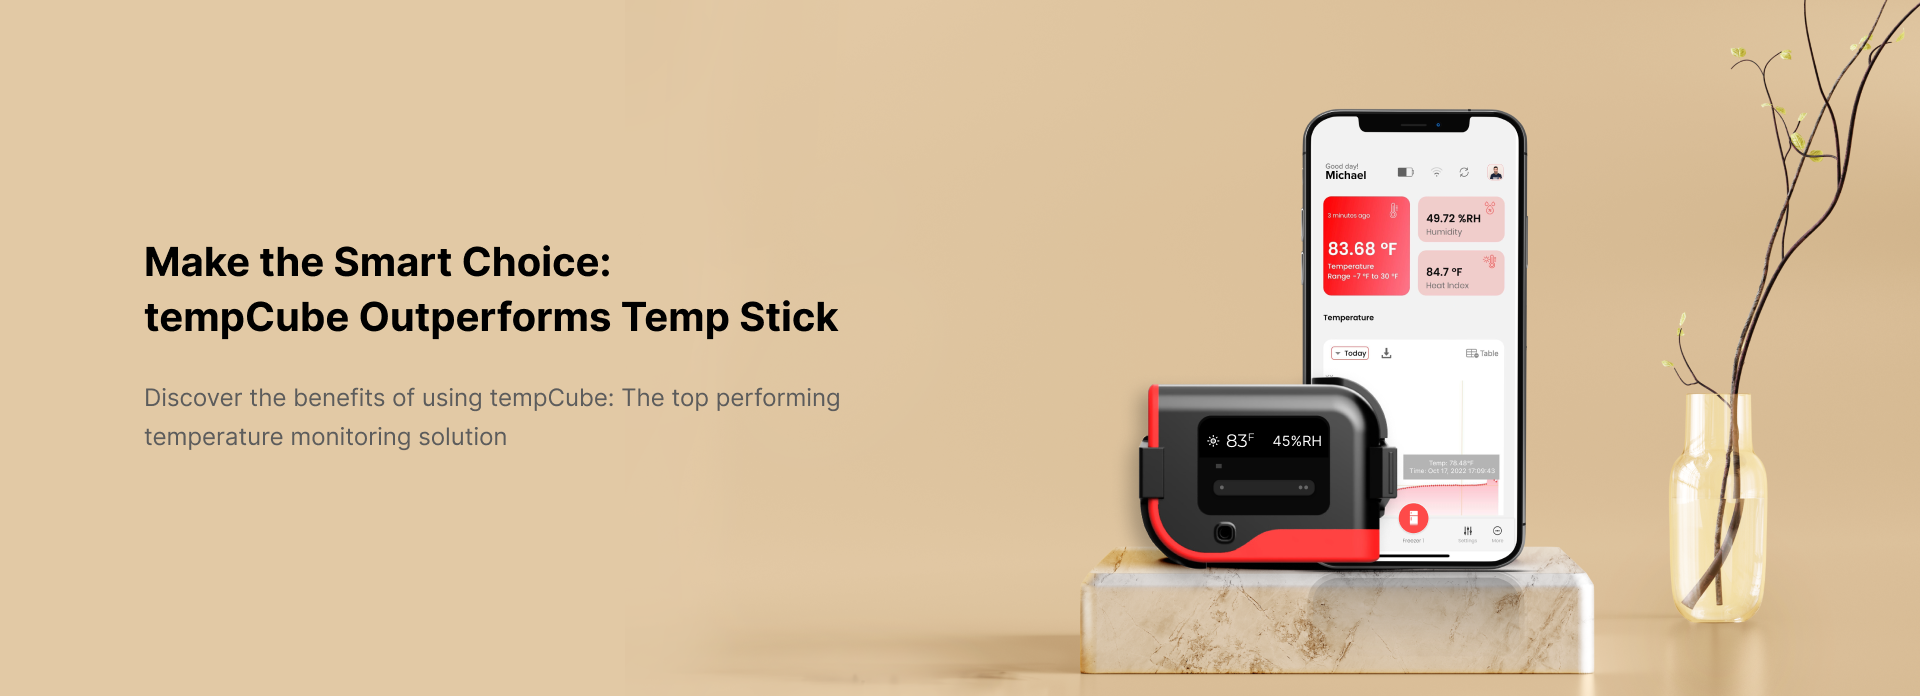 Temp Stick Wifi Temperature & Humidity Sensor